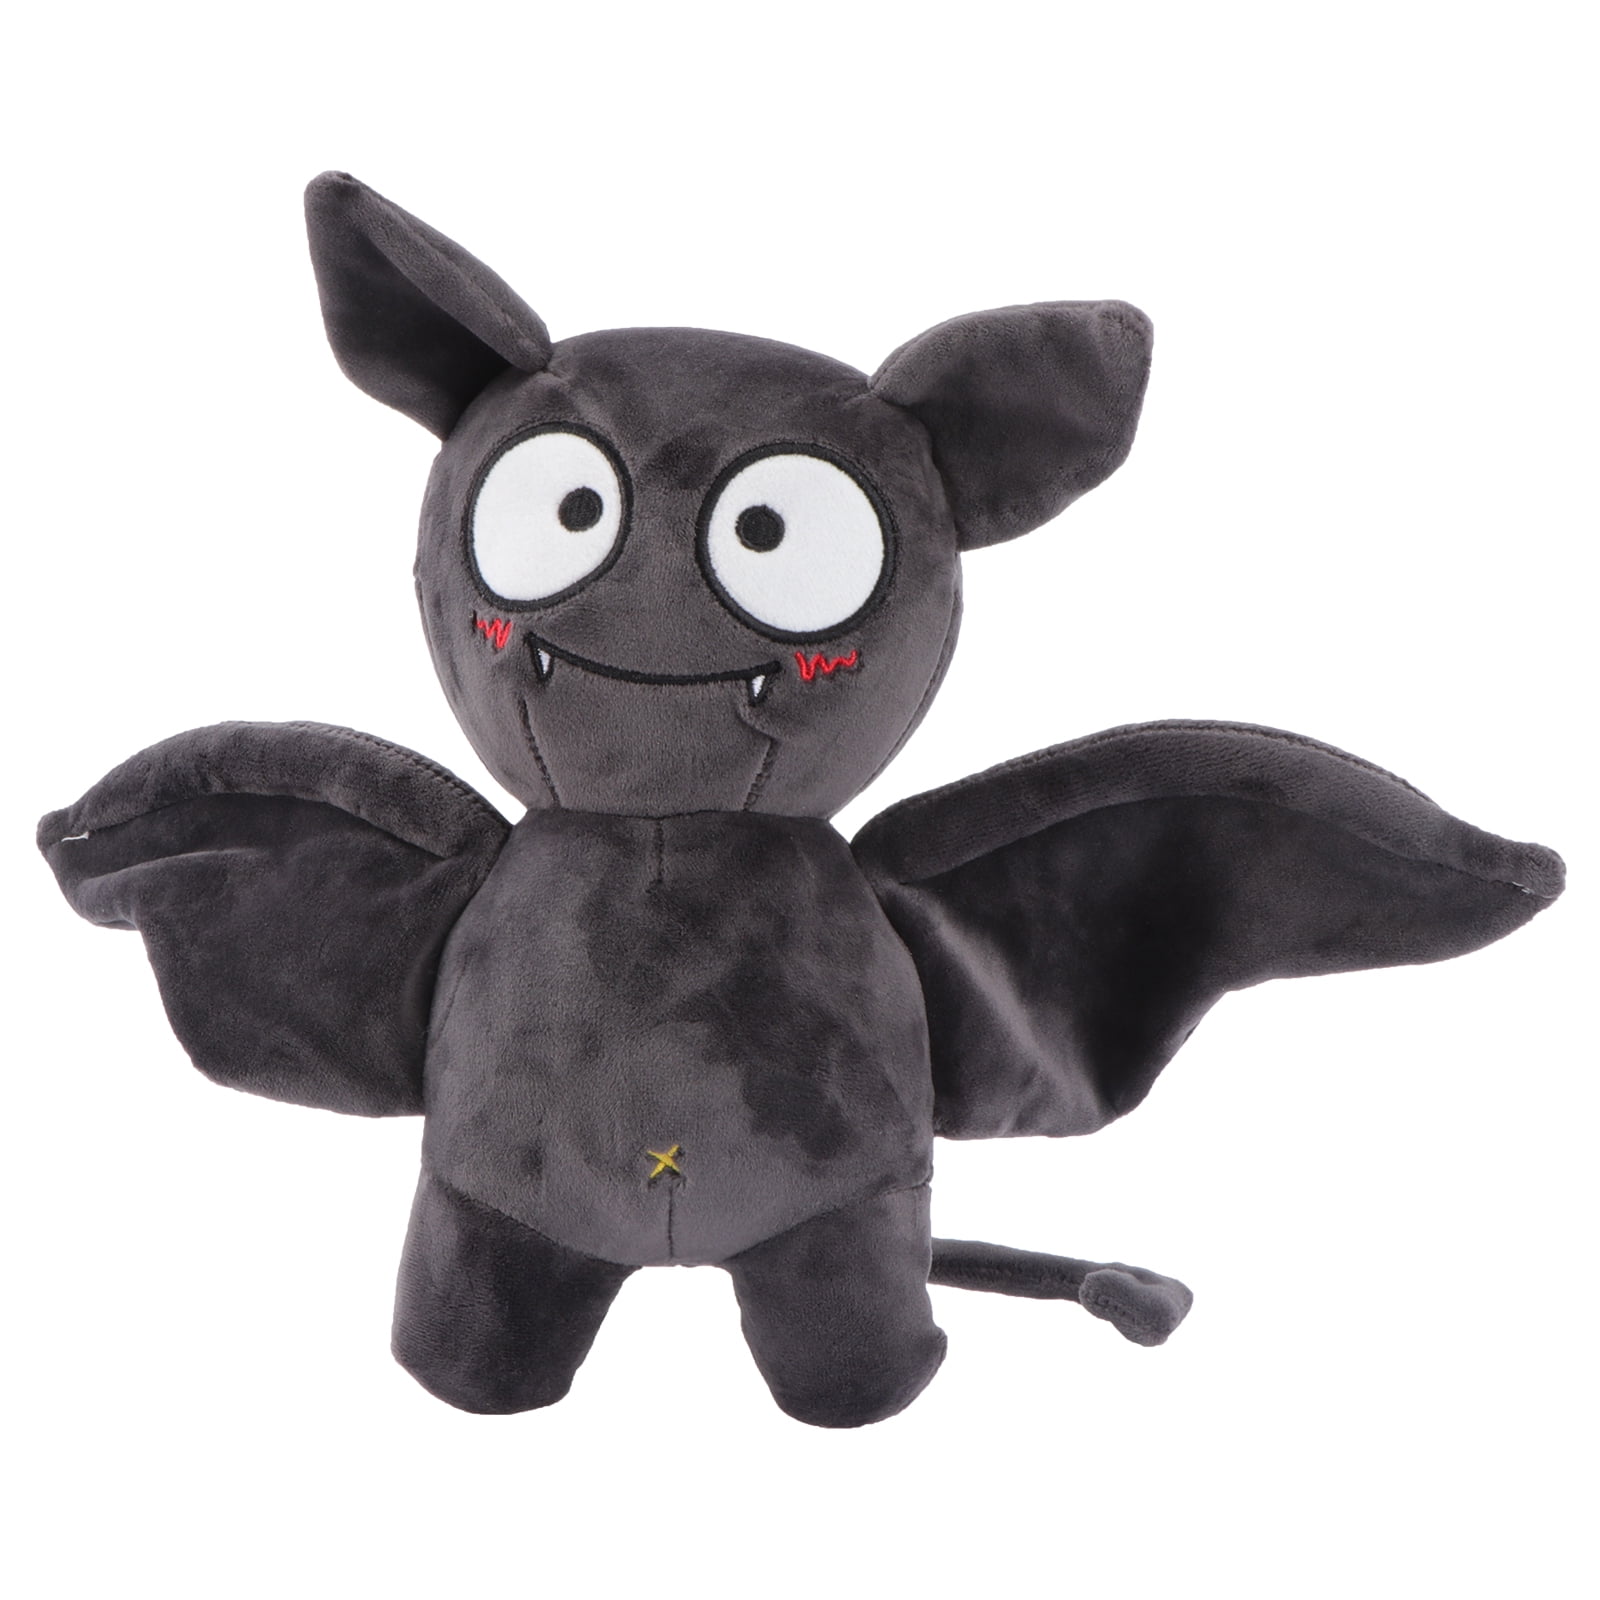 1pc Halloween Plush Toy Bat Shape Design Halloween Party Prop Halloween Decoration Gift Toy Black